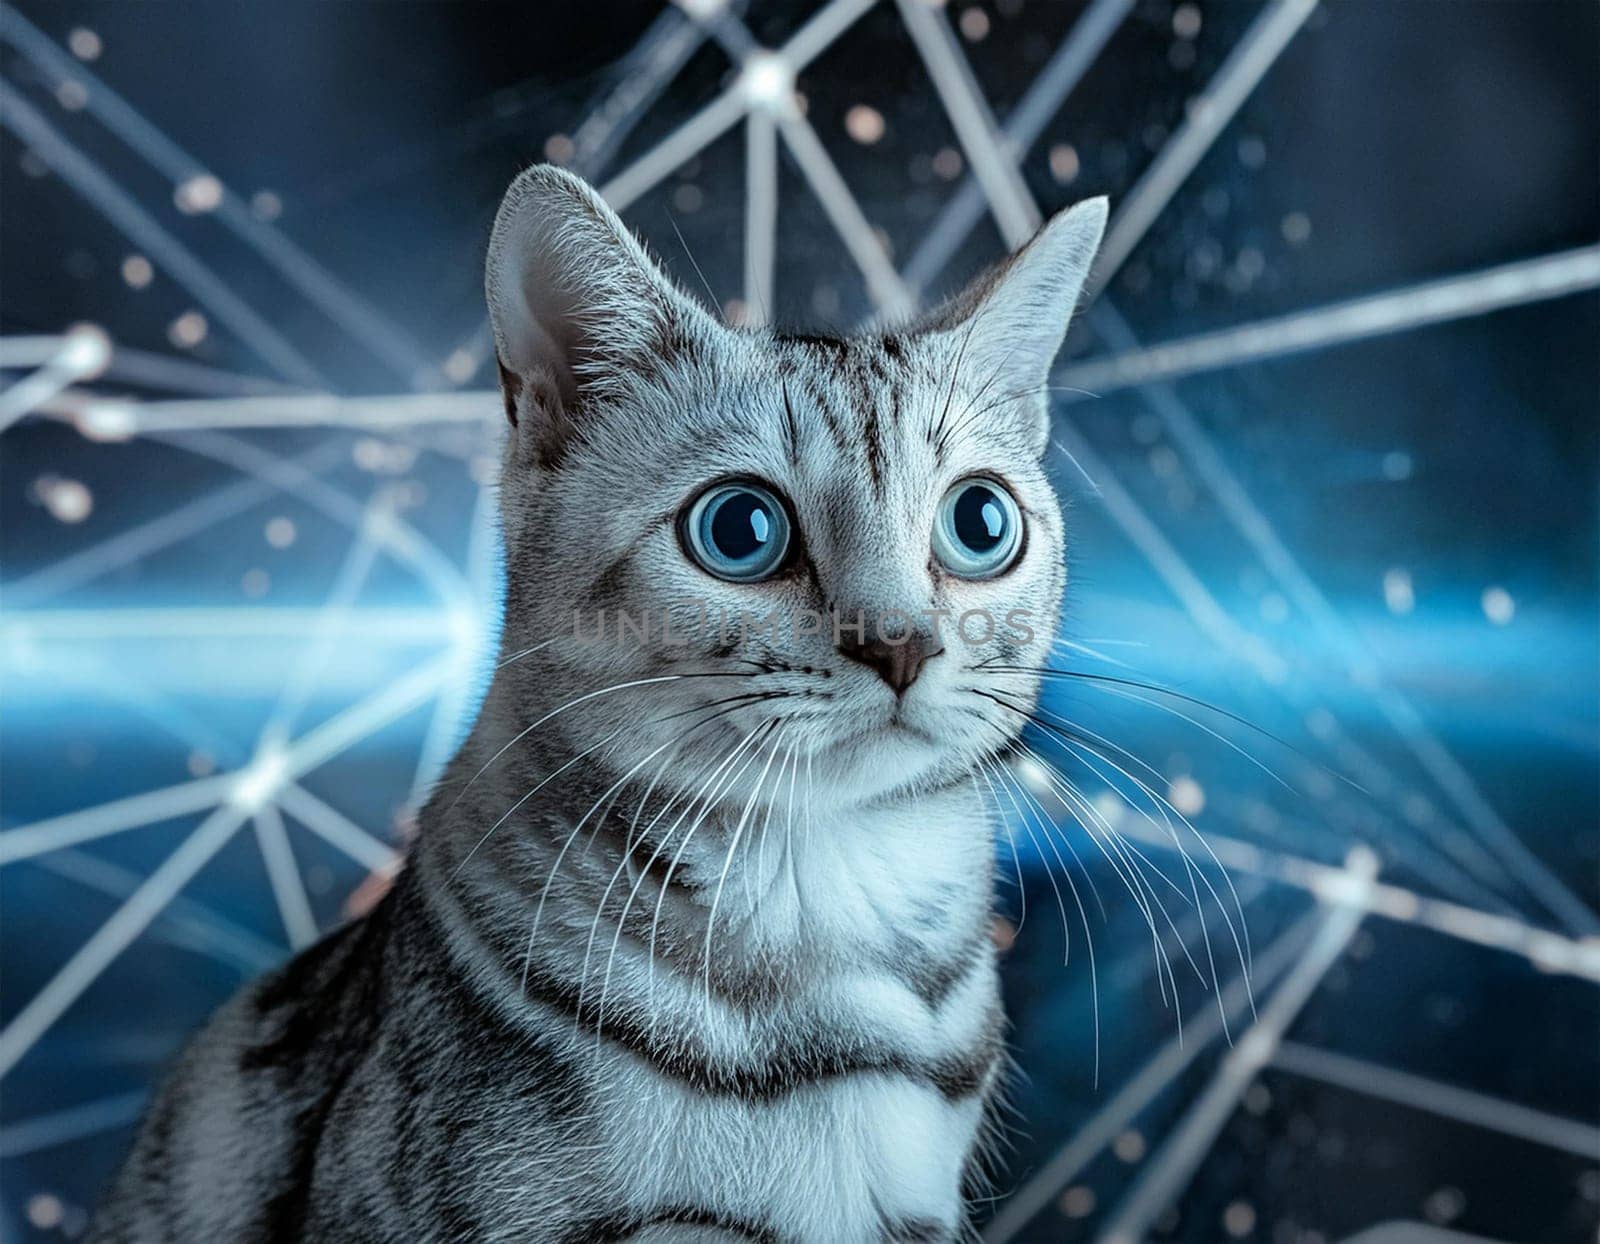 Close-up cat portrait against futuristic blue background by JFsPic